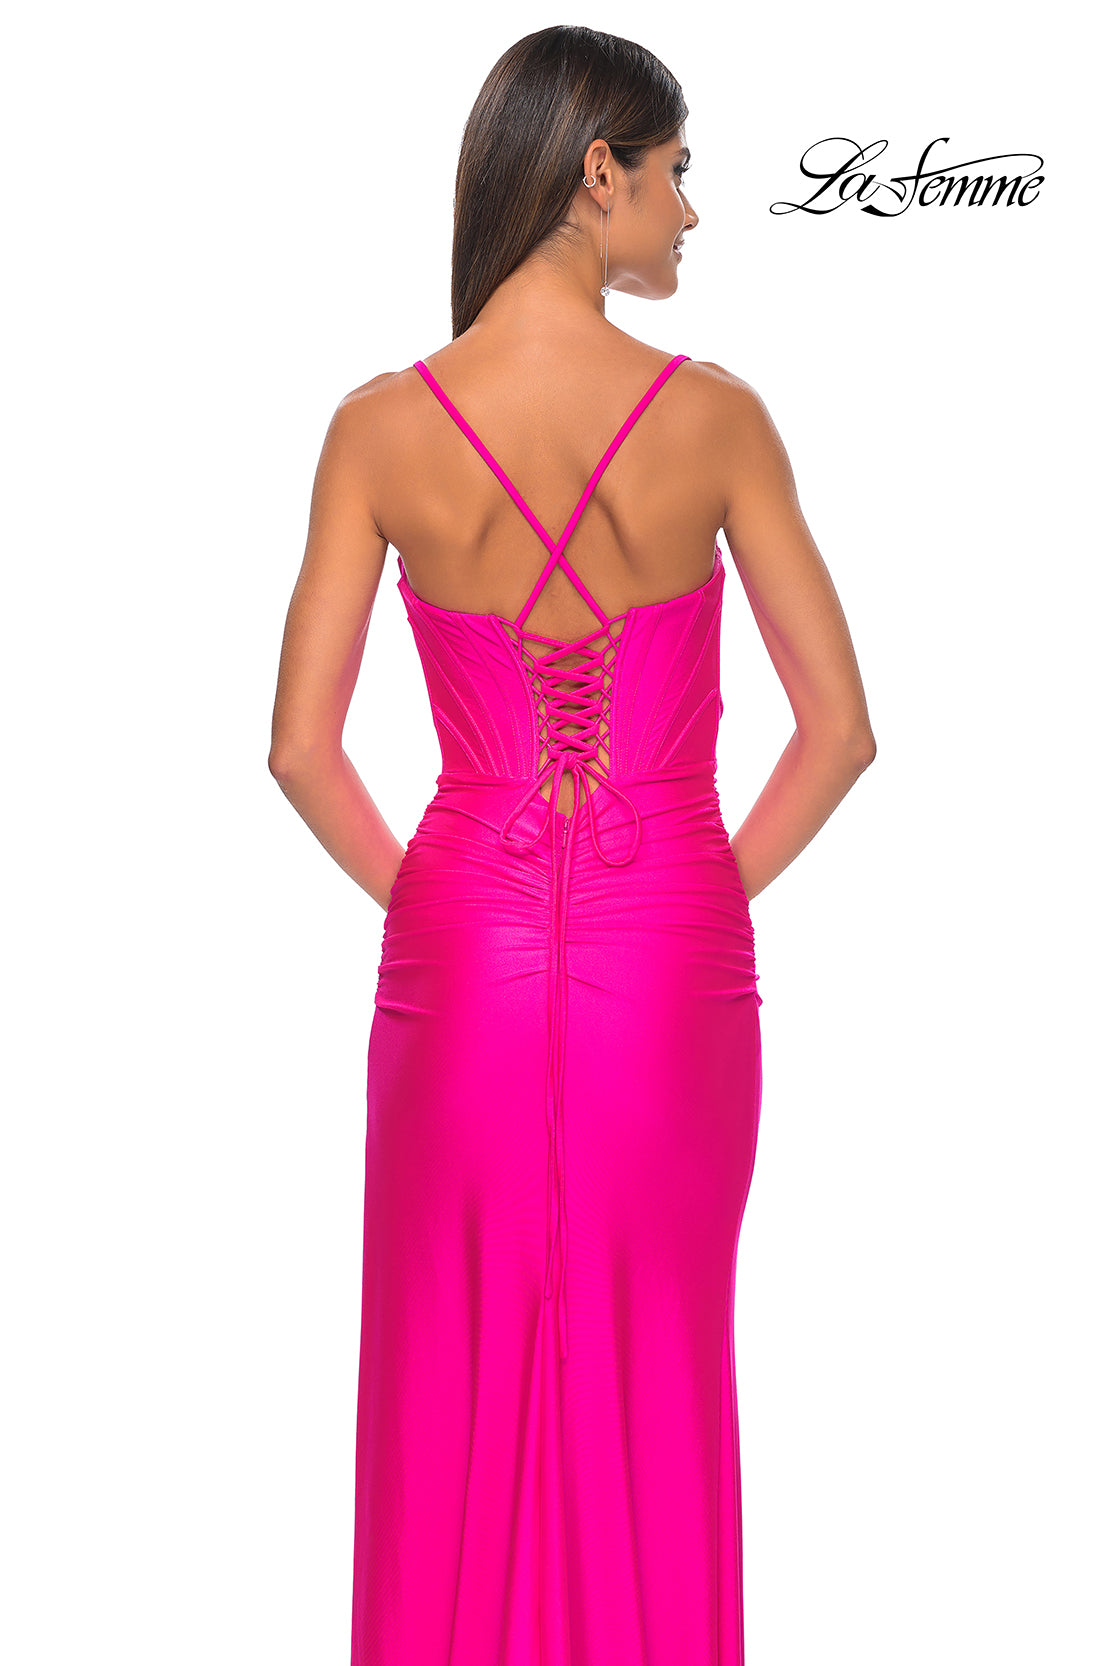 La Femme 32256 Sweetheart Neckline Lace up Back High Slit Jersey Fitted Evening Dress